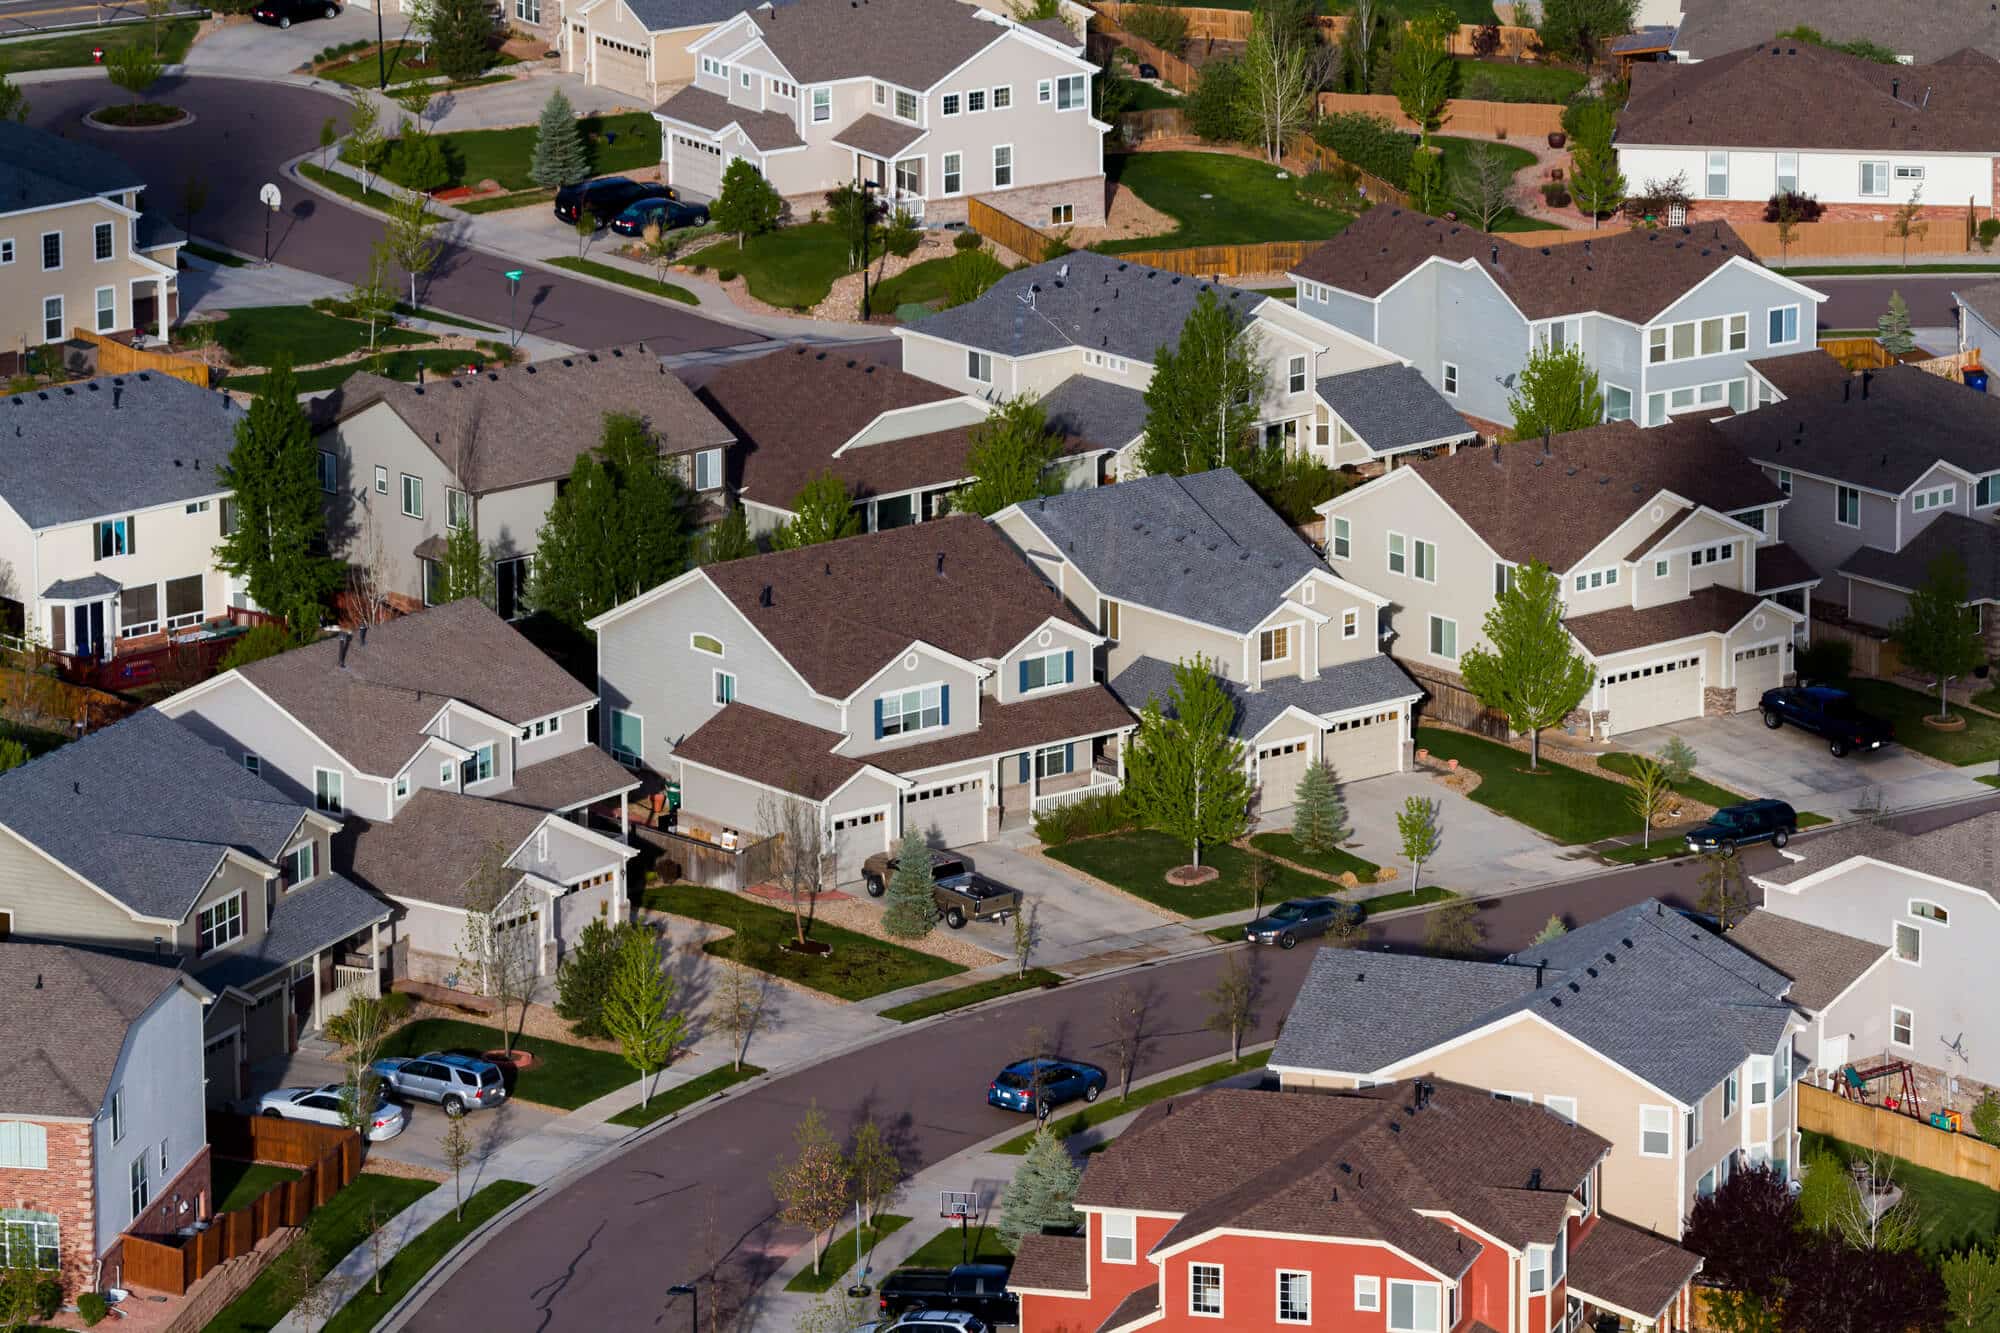 Houses in a suburban neighborhood - Sprint Funding